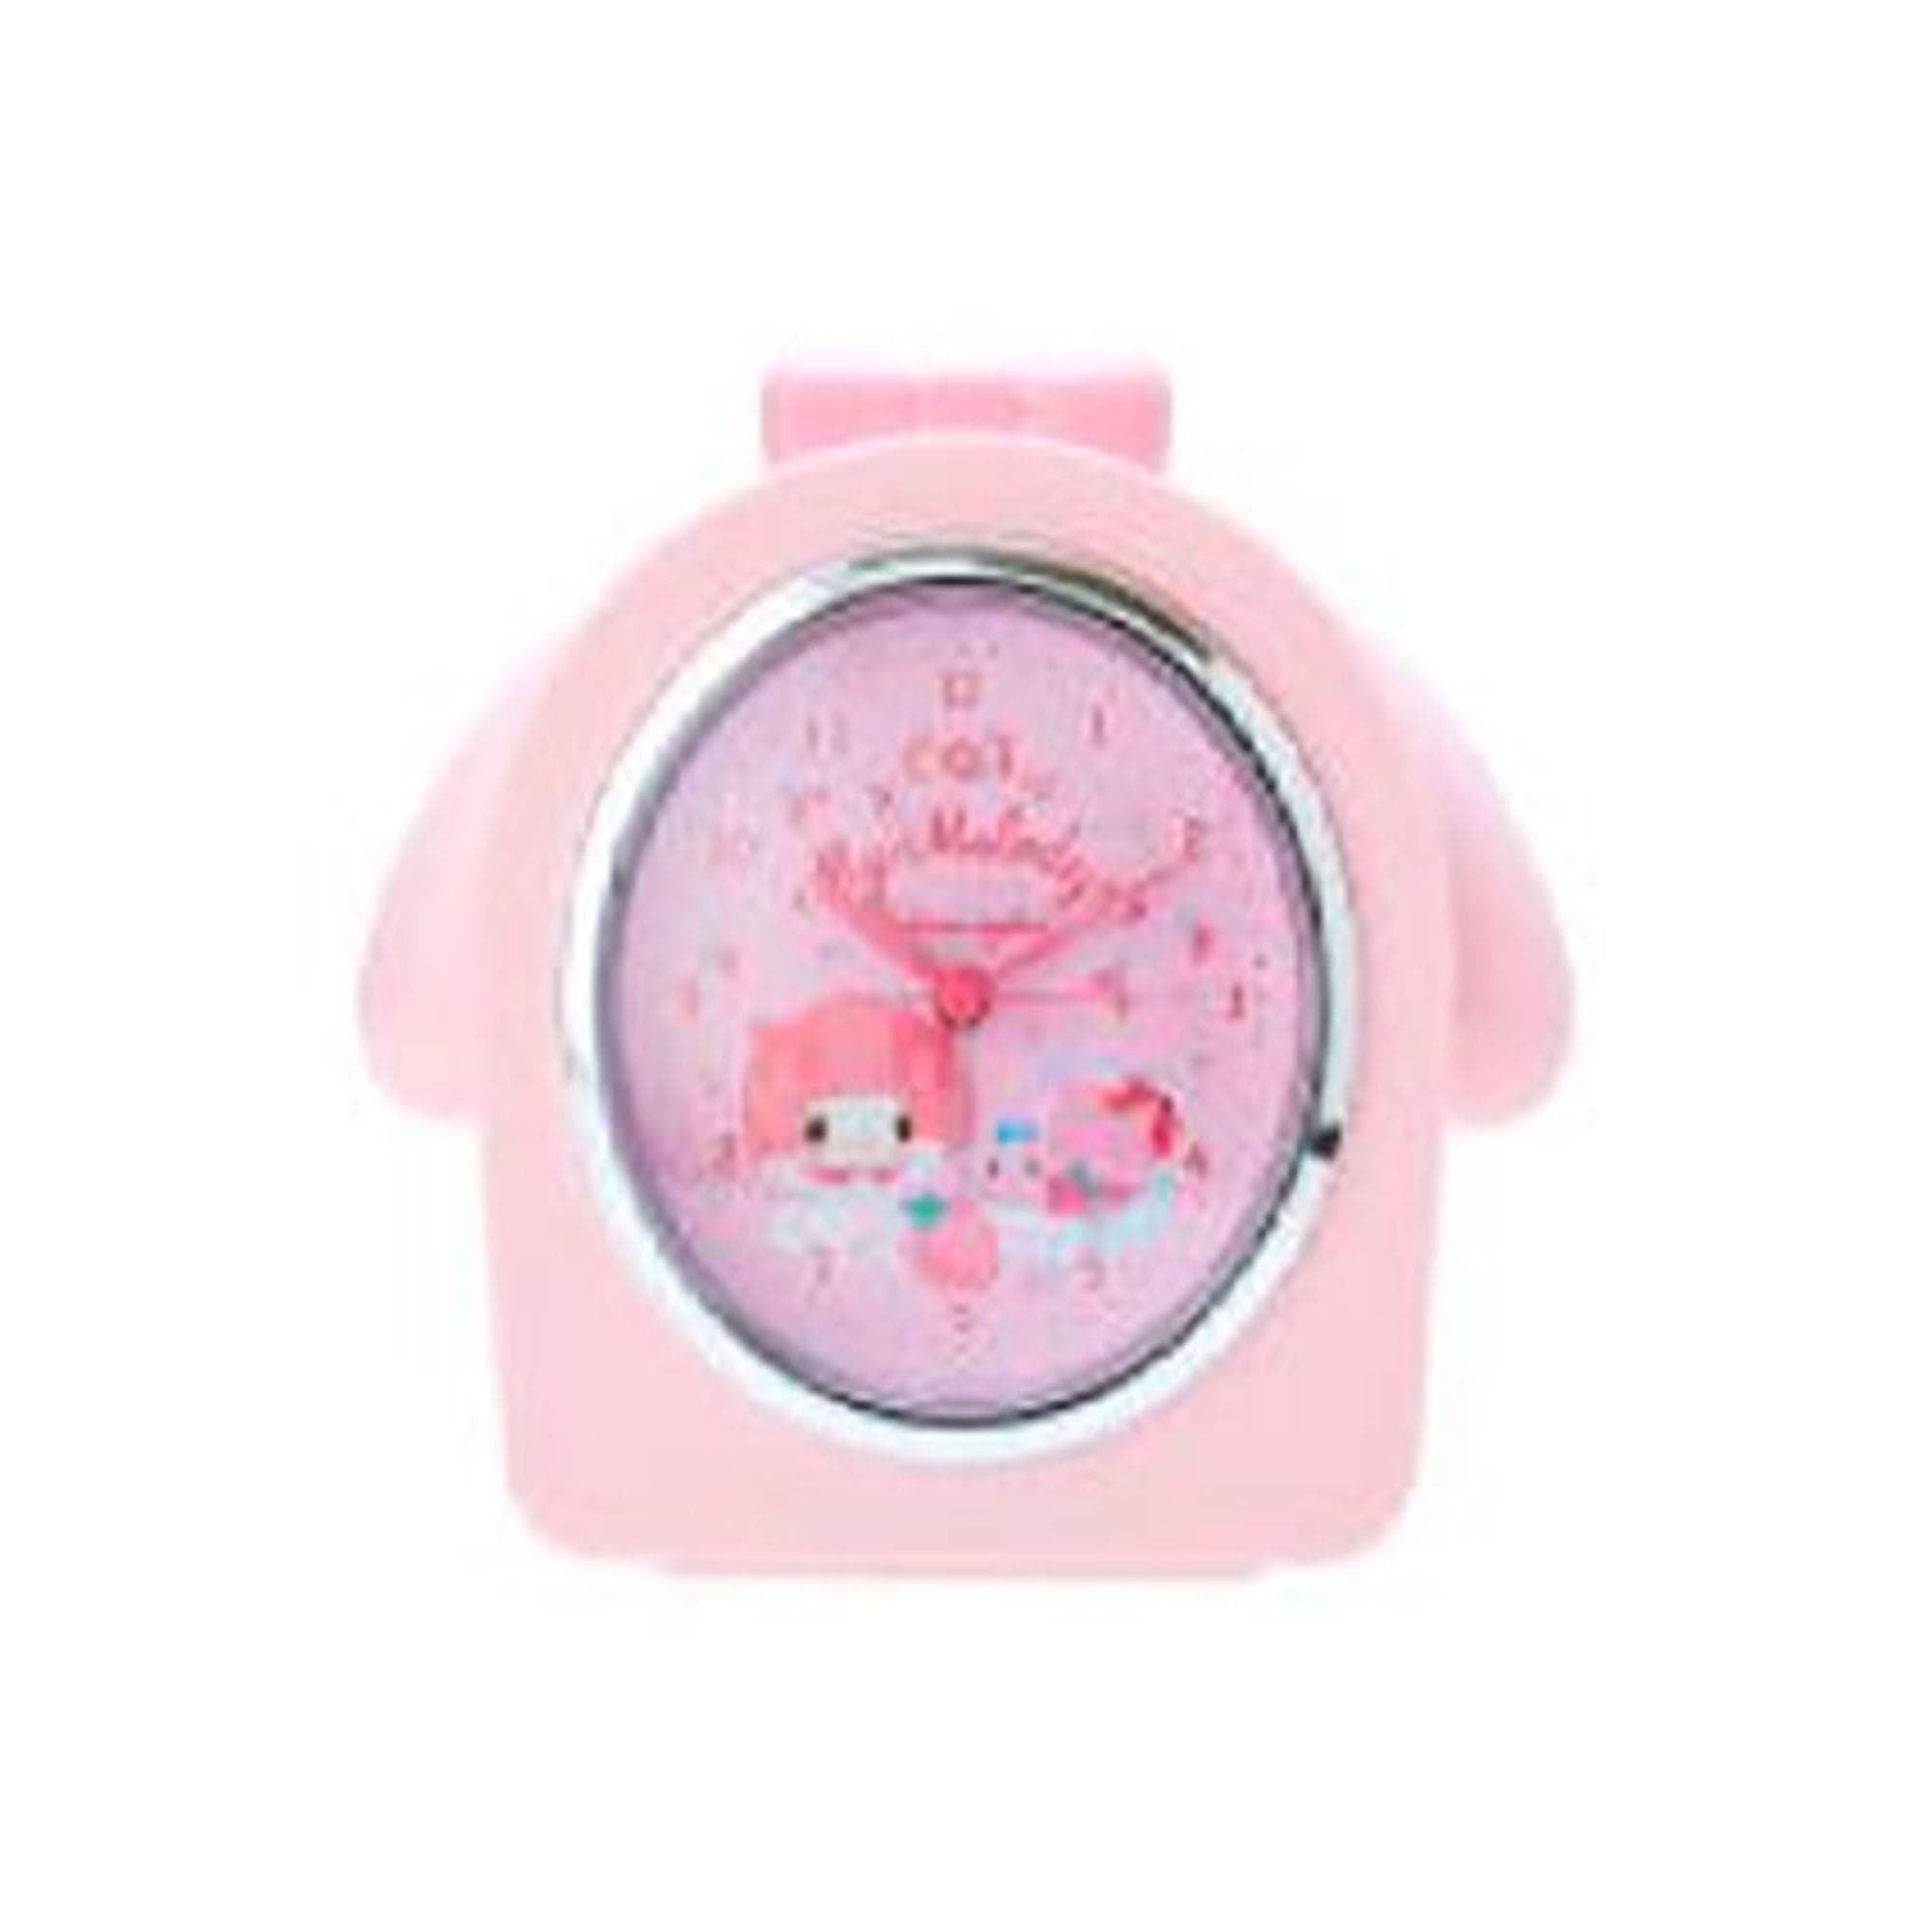 Enesco Sanrio My Melody Die-Cut Alarm Clock Kawaii Gifts